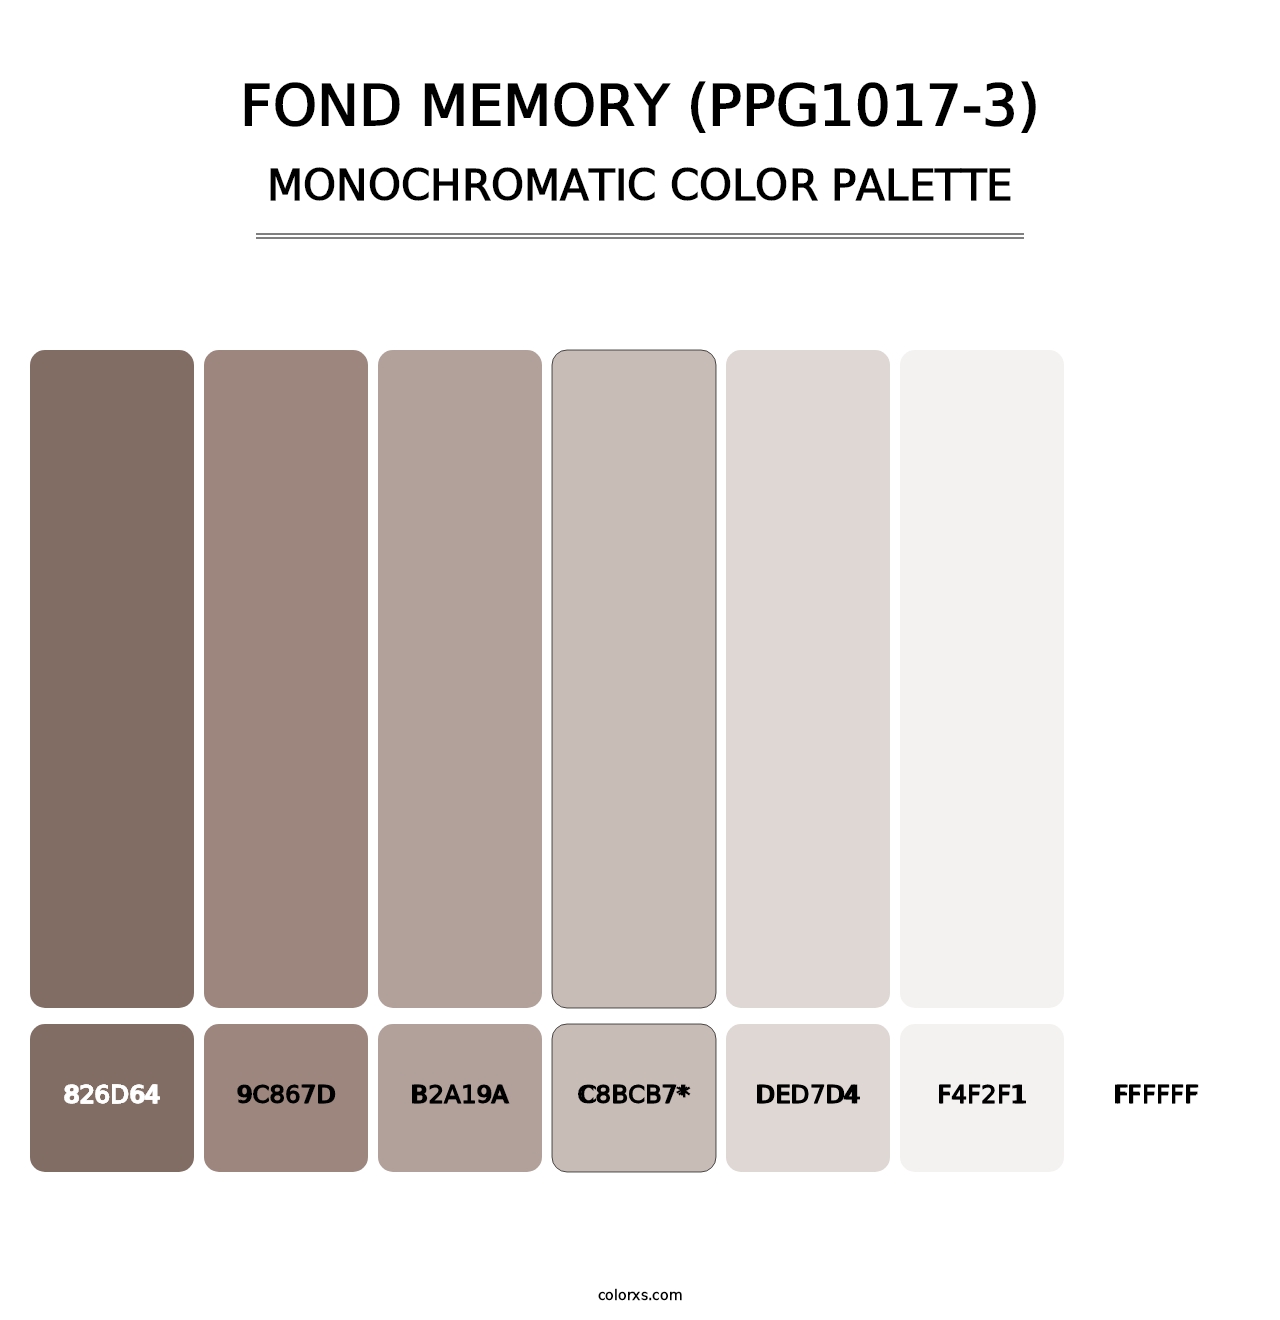 Fond Memory (PPG1017-3) - Monochromatic Color Palette